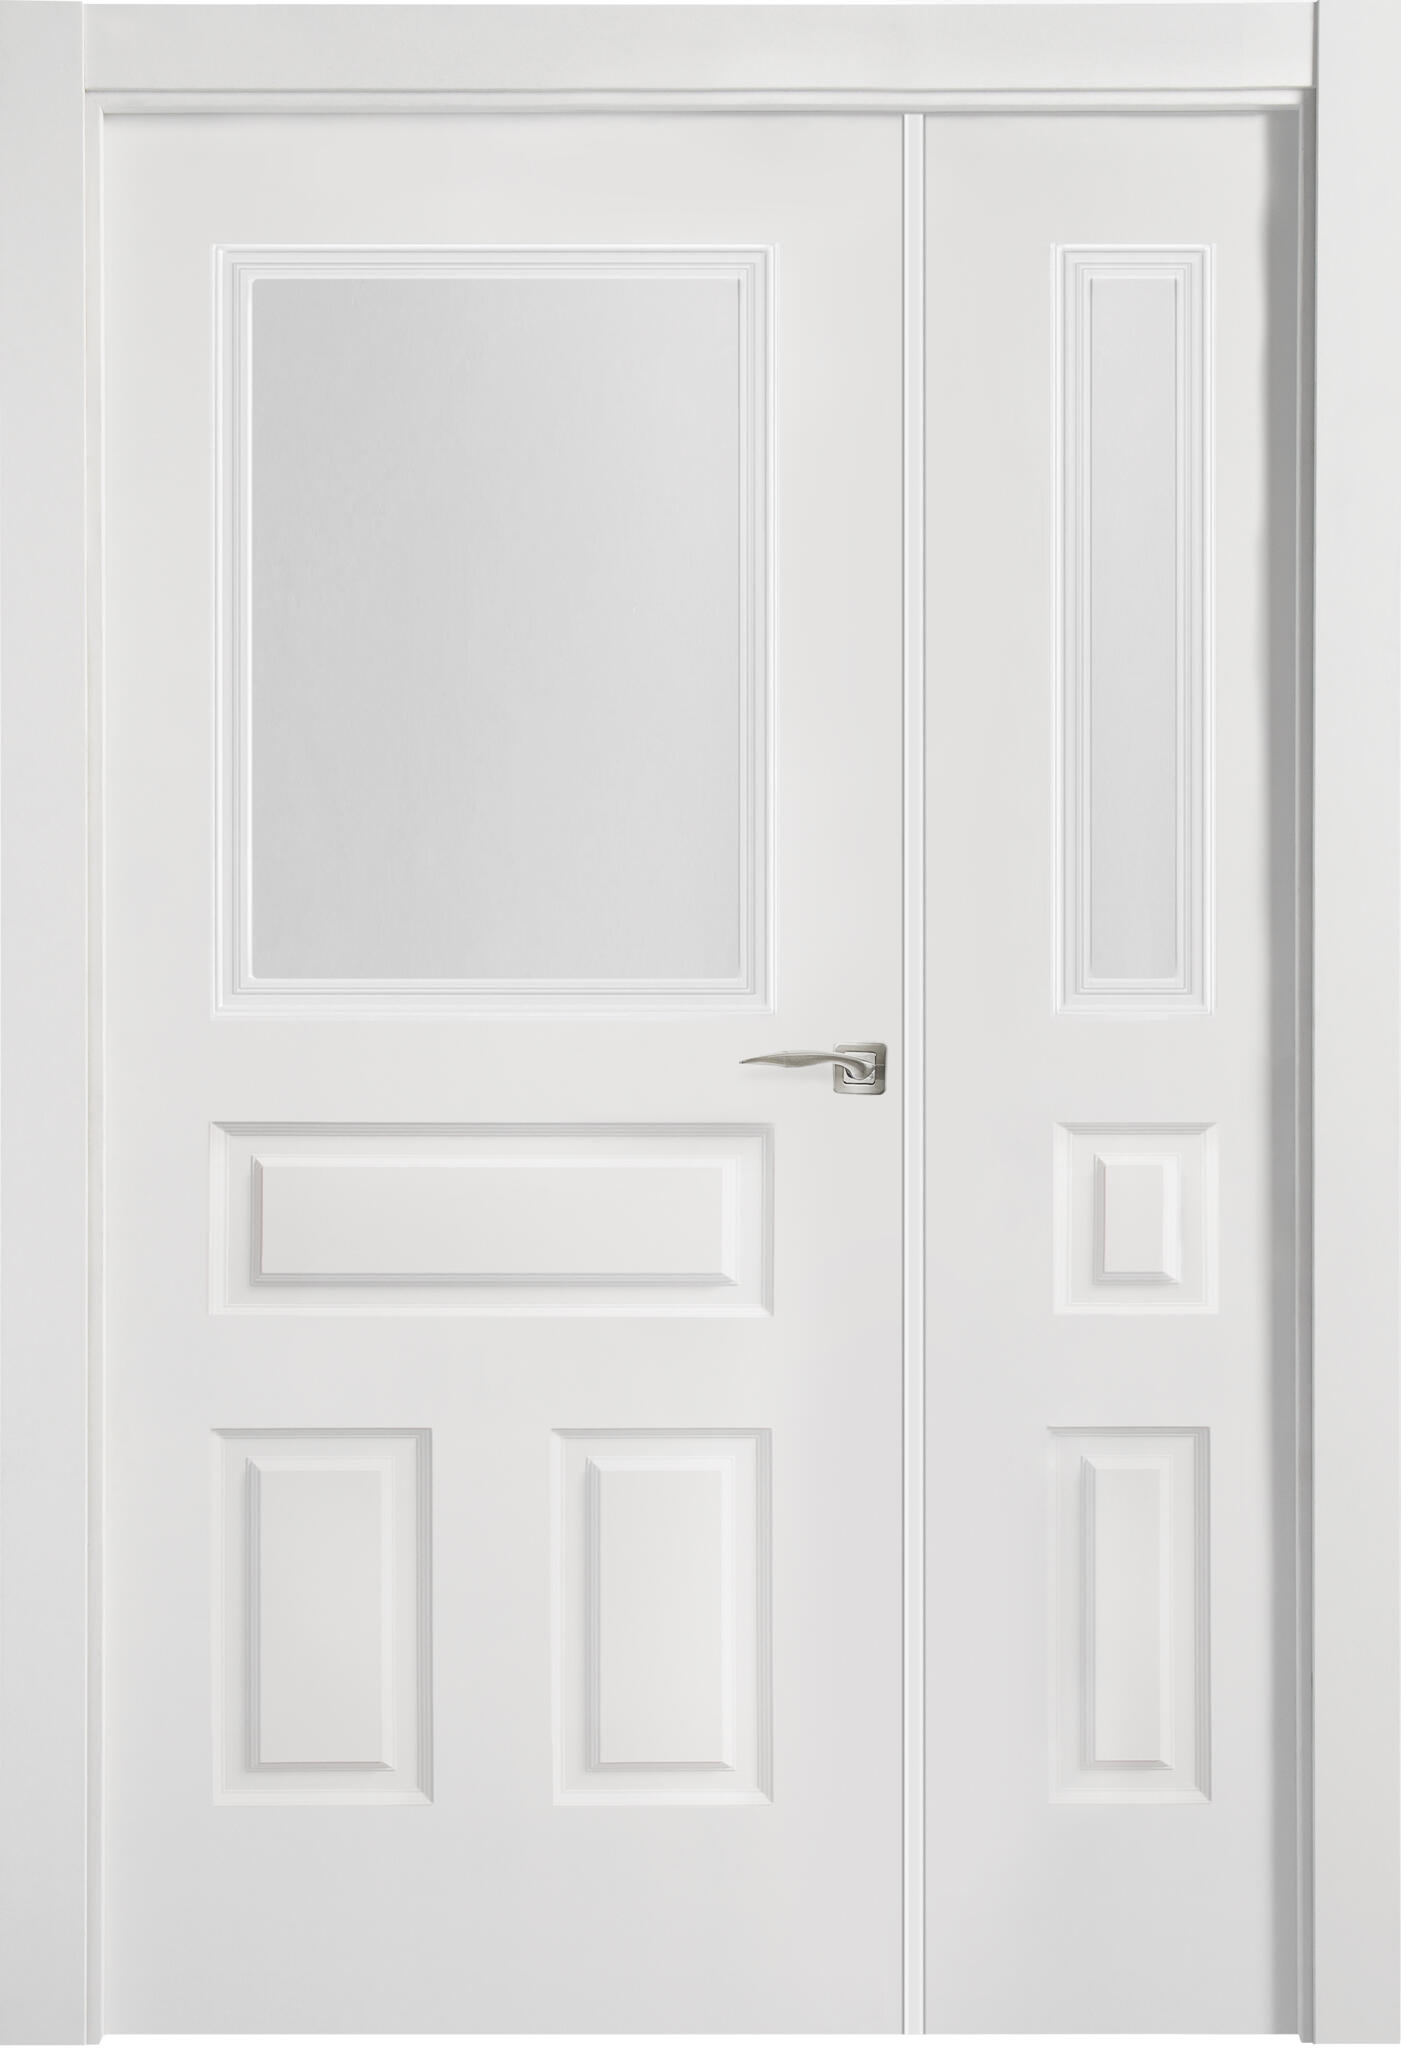 Puerta indiana plus blanco apertura izquierda con cristal de 11x115cm